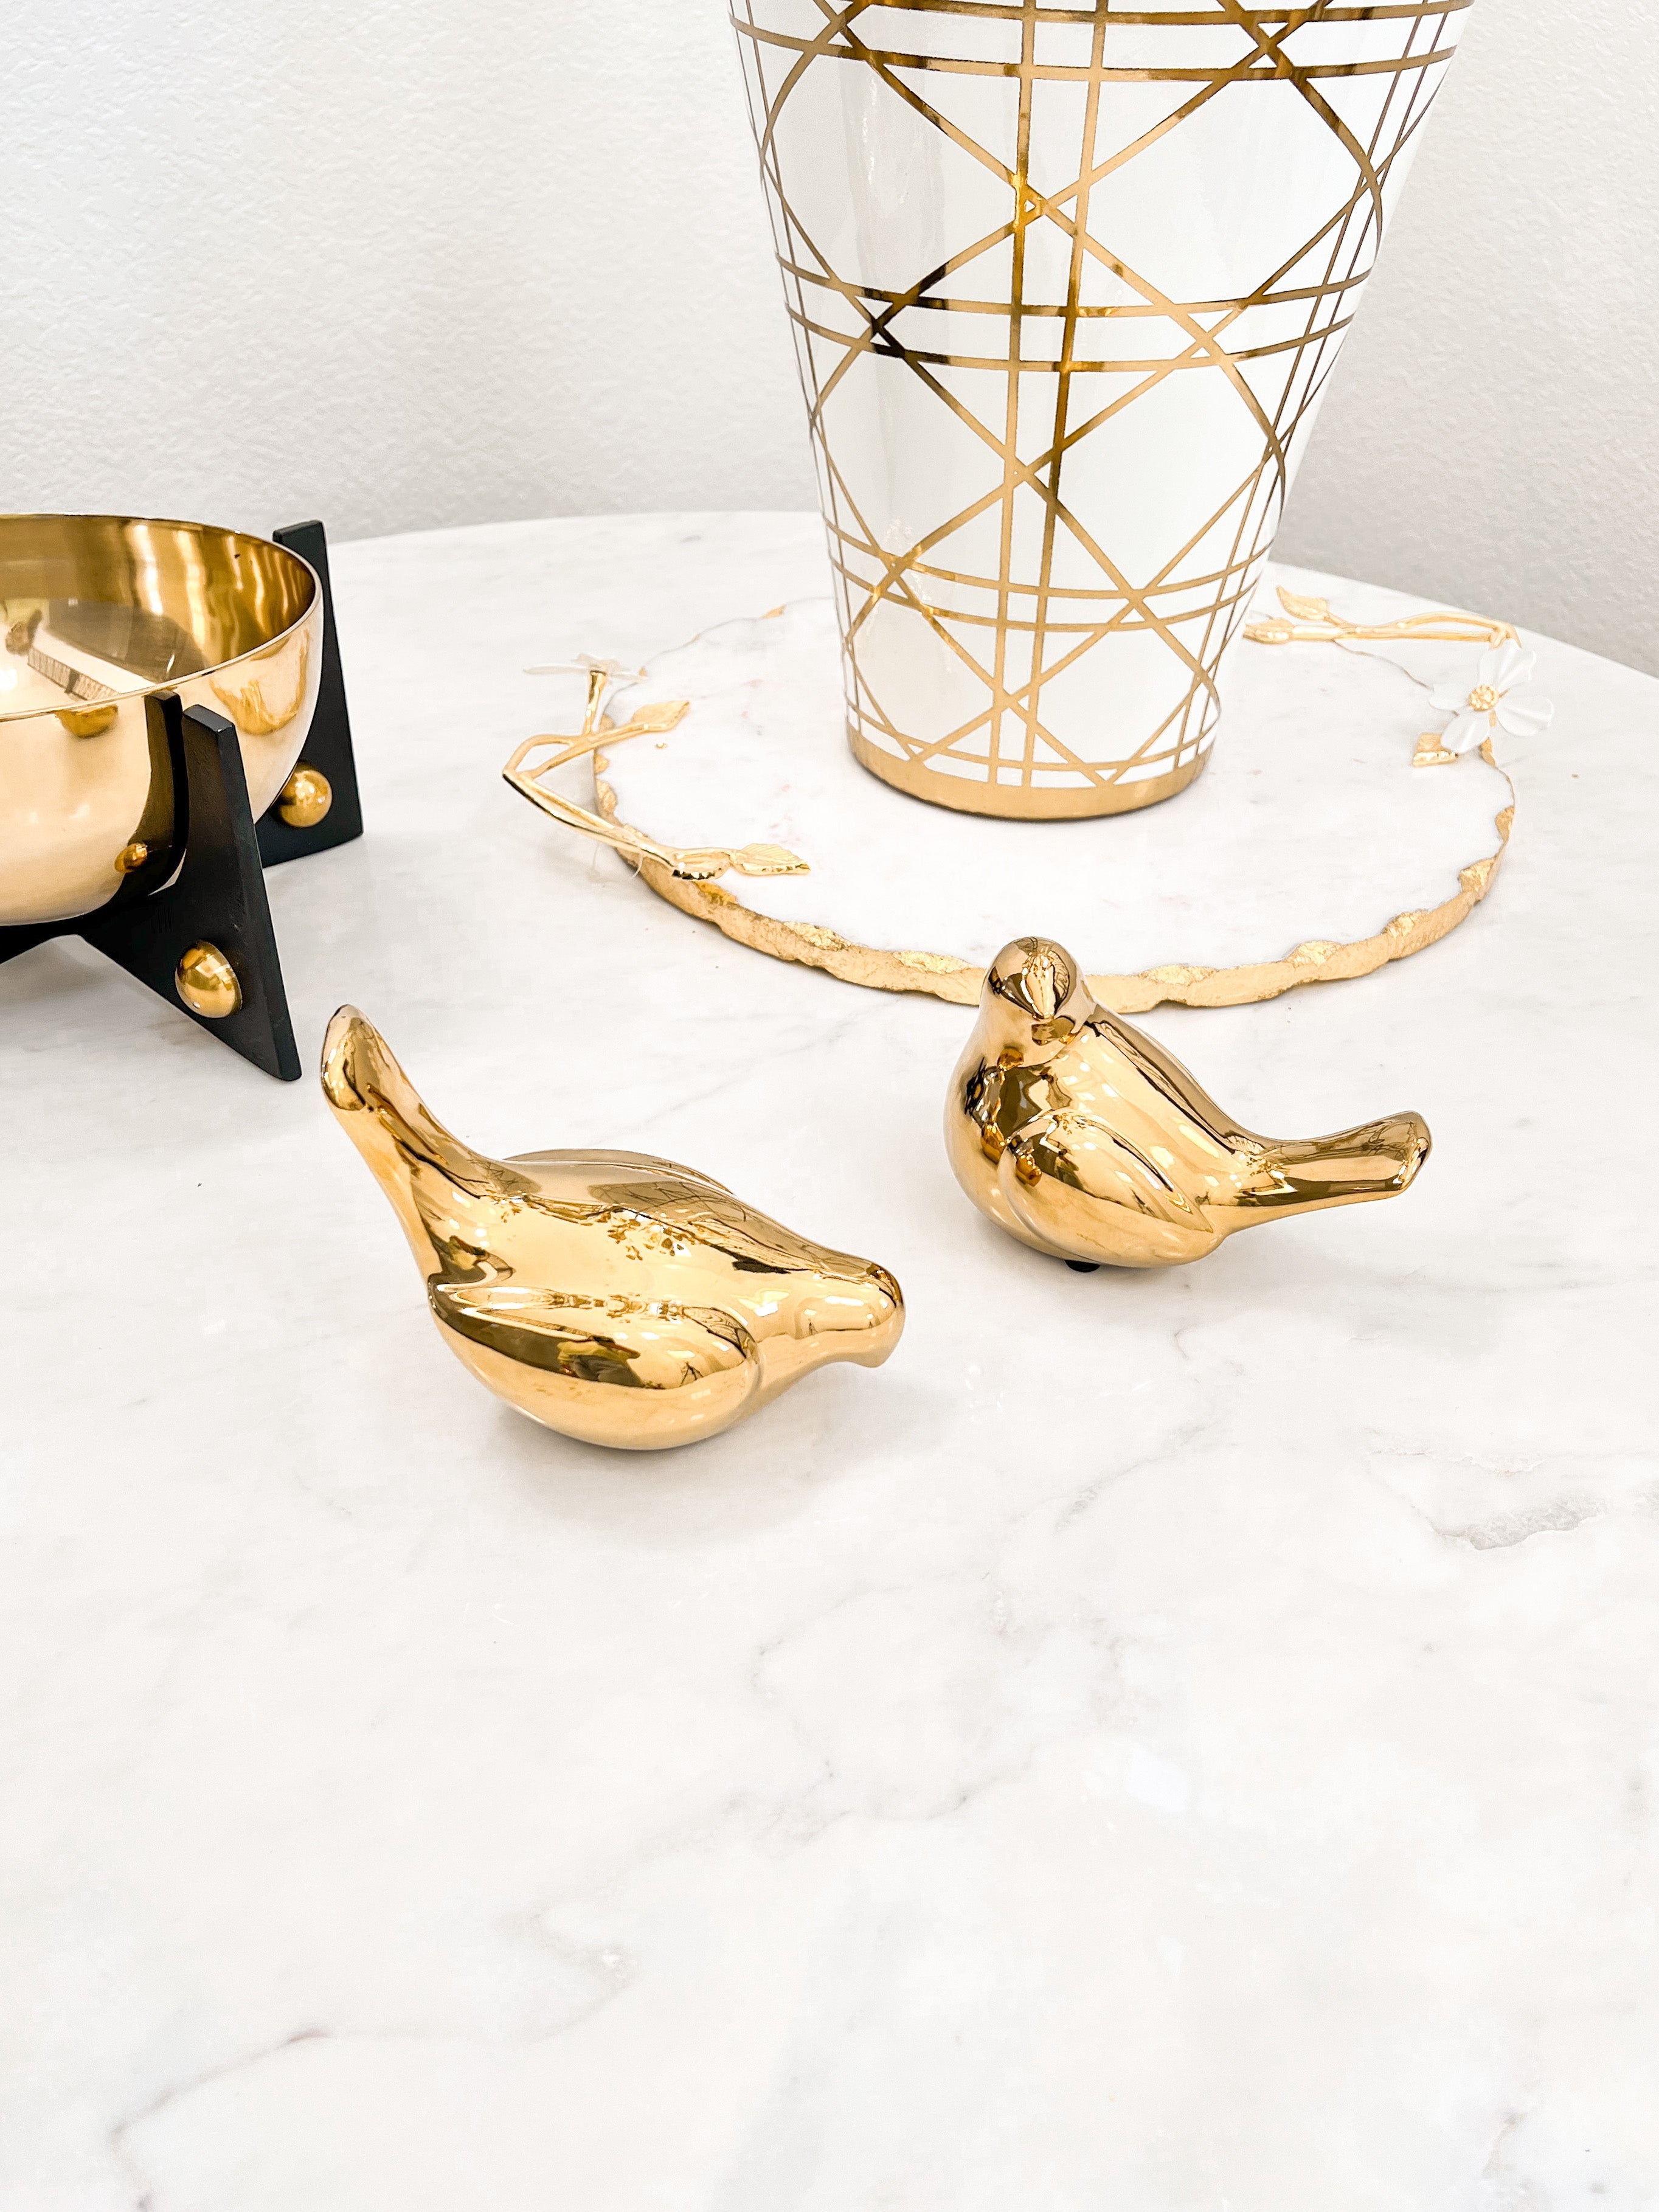 Gold Birds Table Top Decorative Sculpture (Set of 2) - HTS HOME DECOR